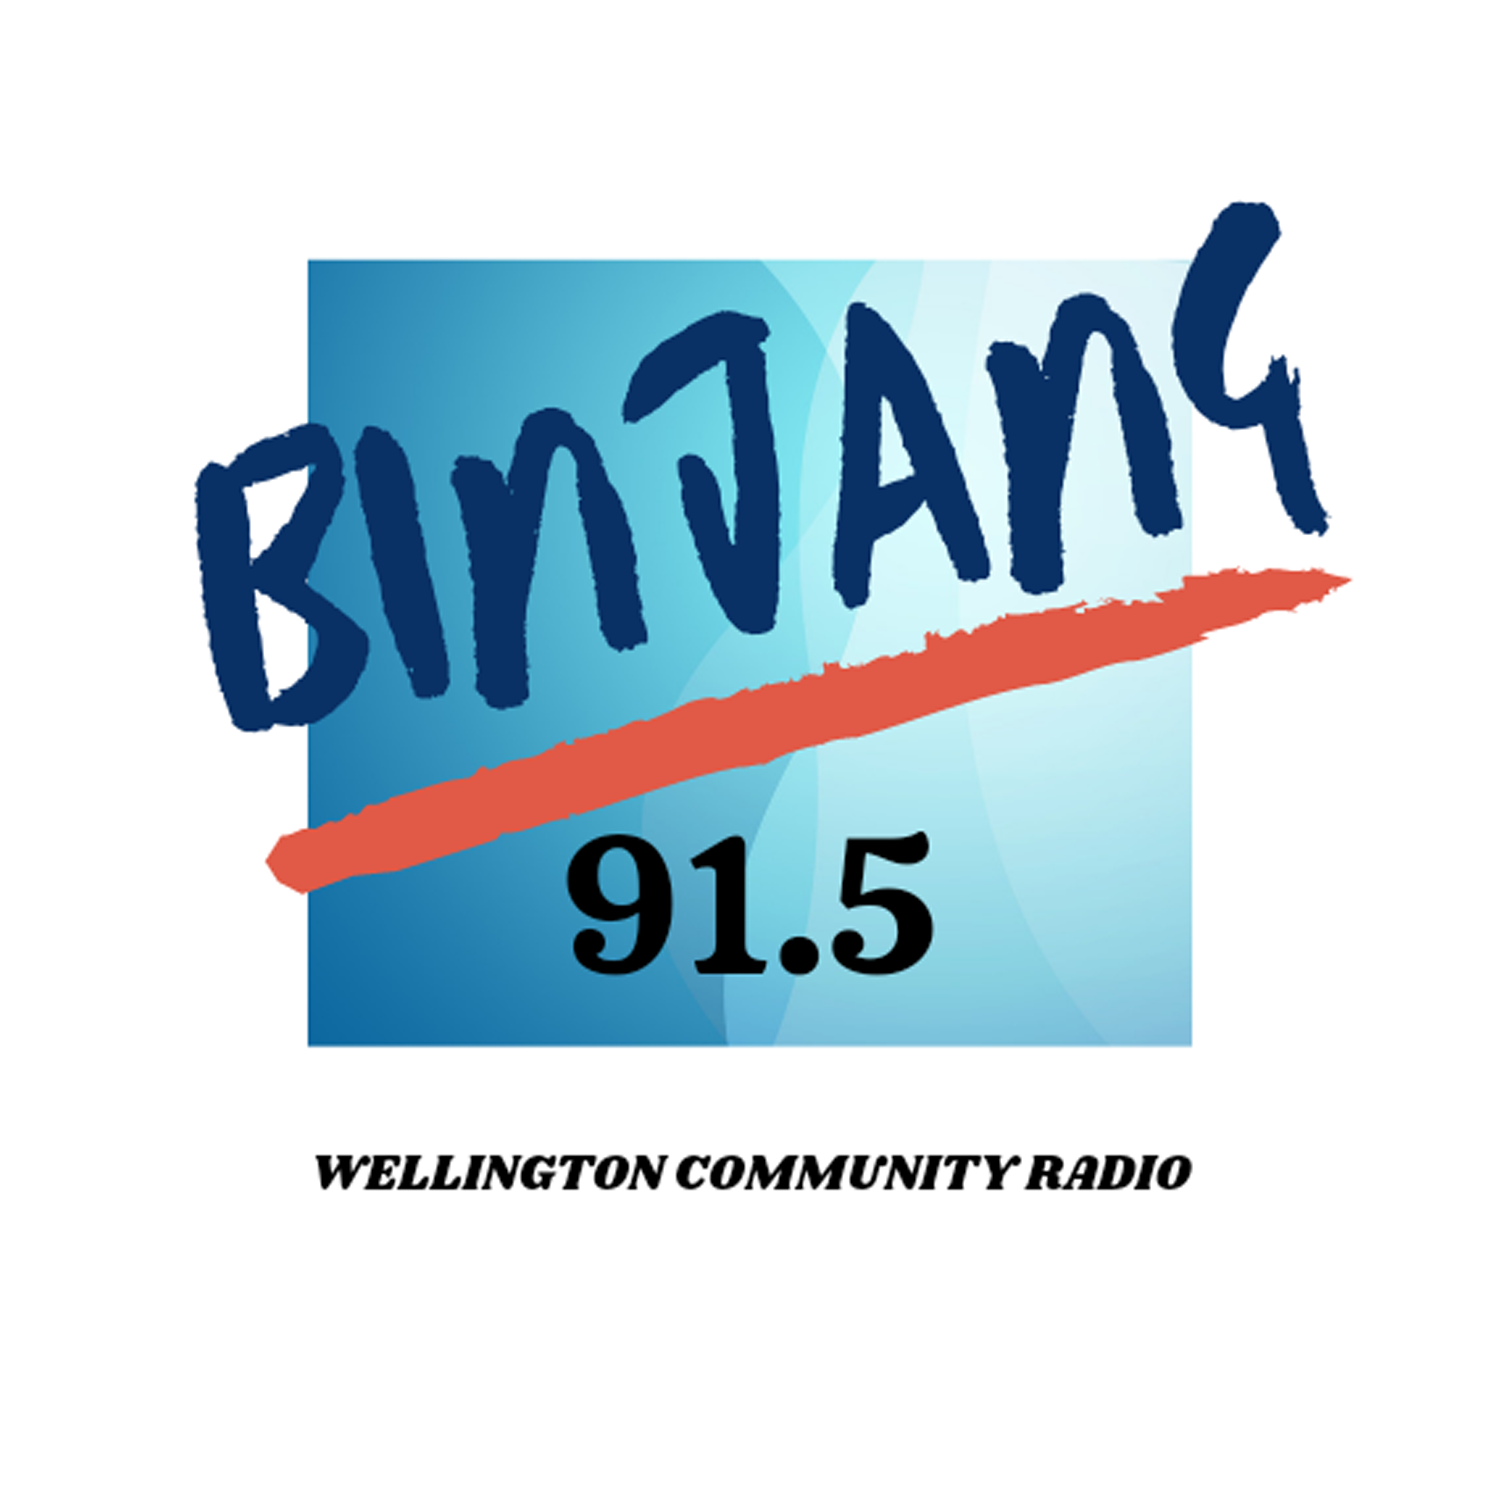 Binjang Community Radio